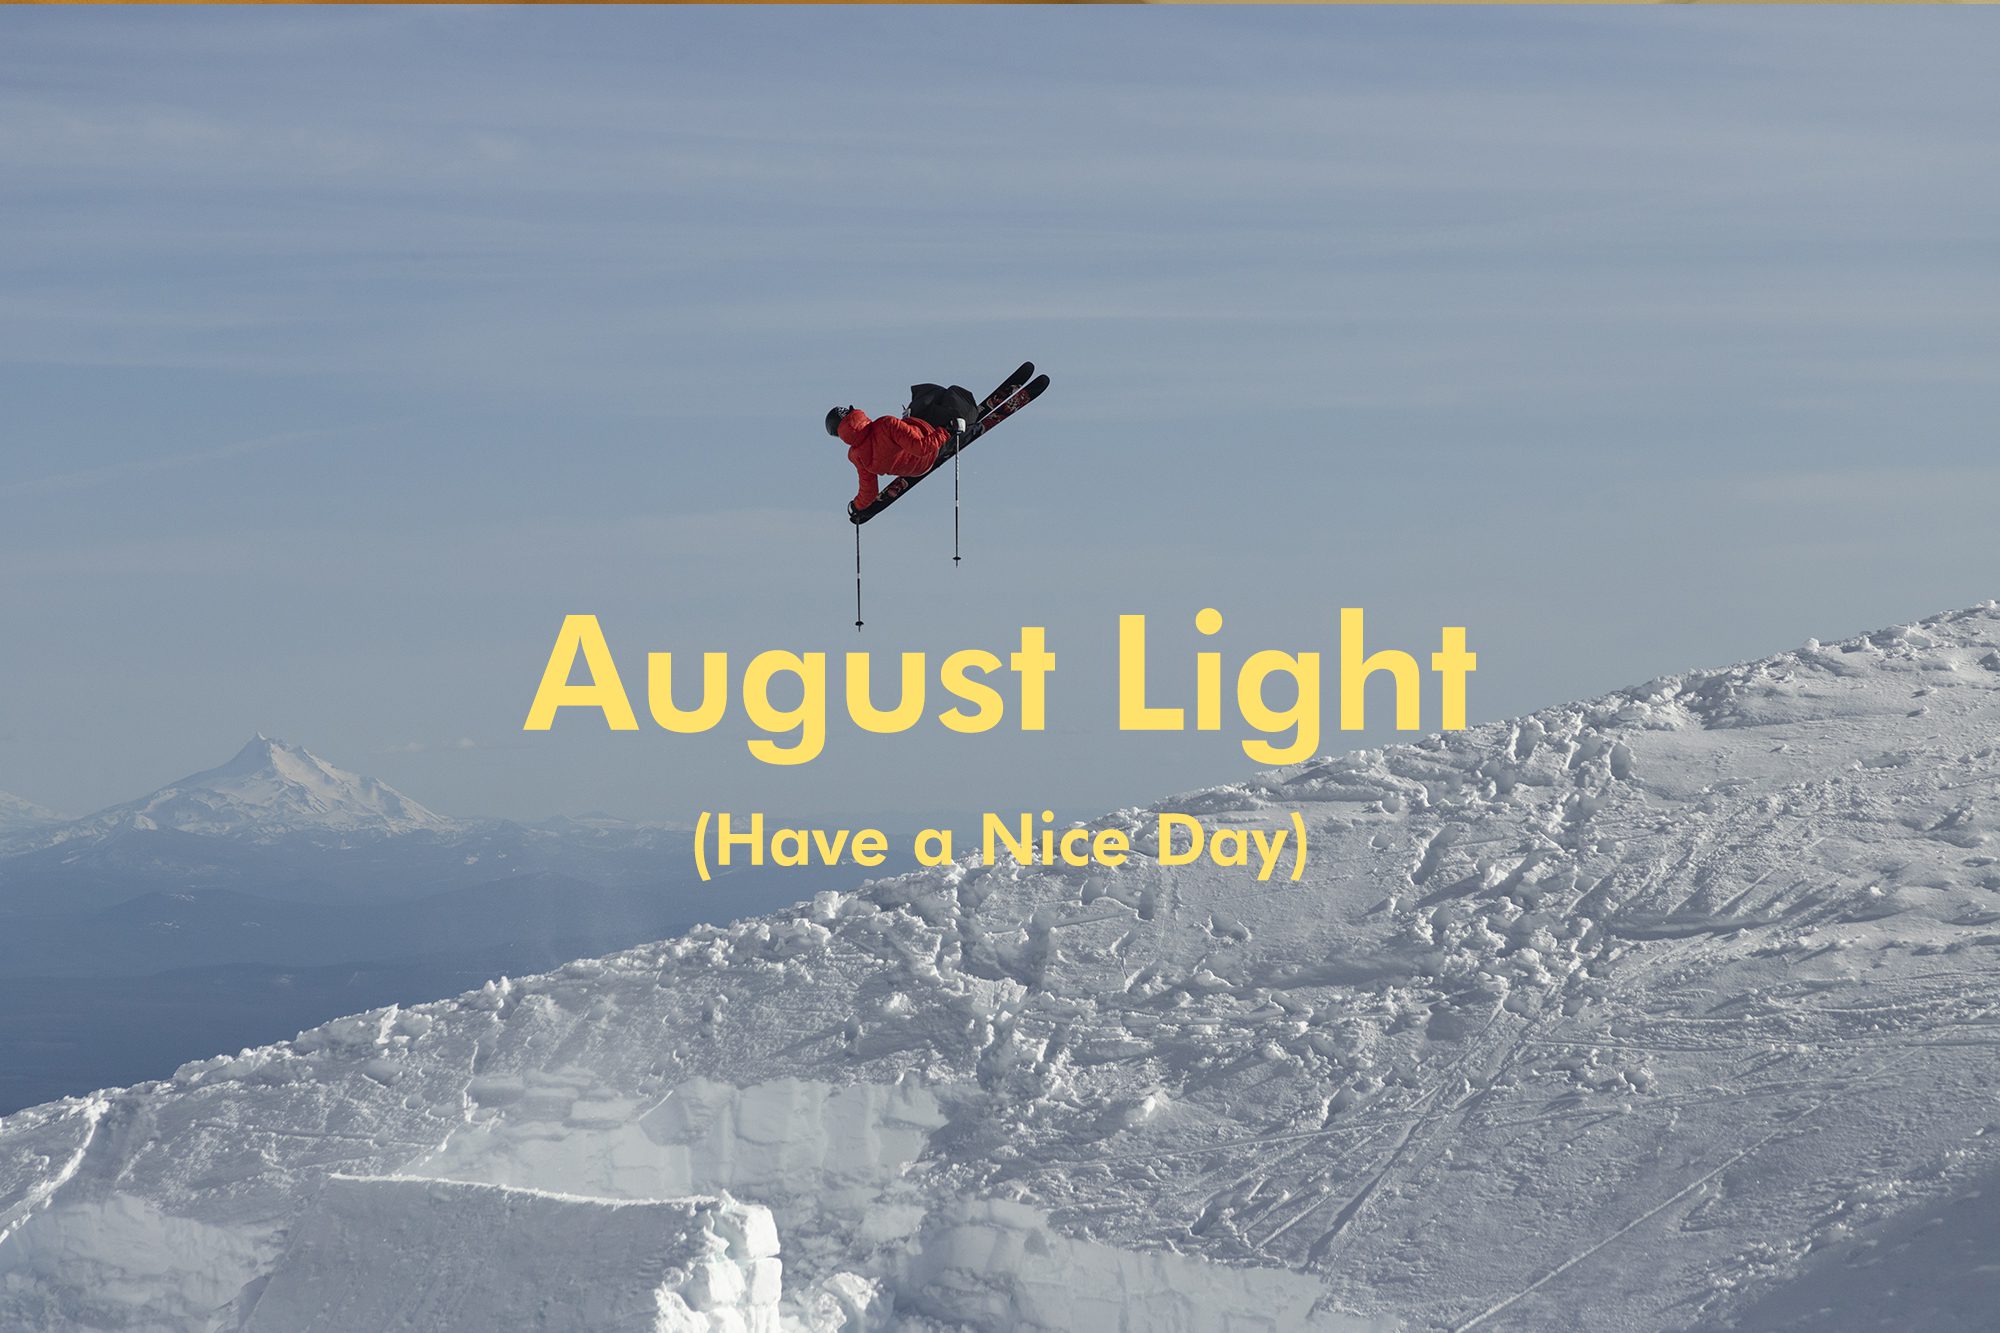 August Light - Film by Gavin Rudy & Ethan Swadburg